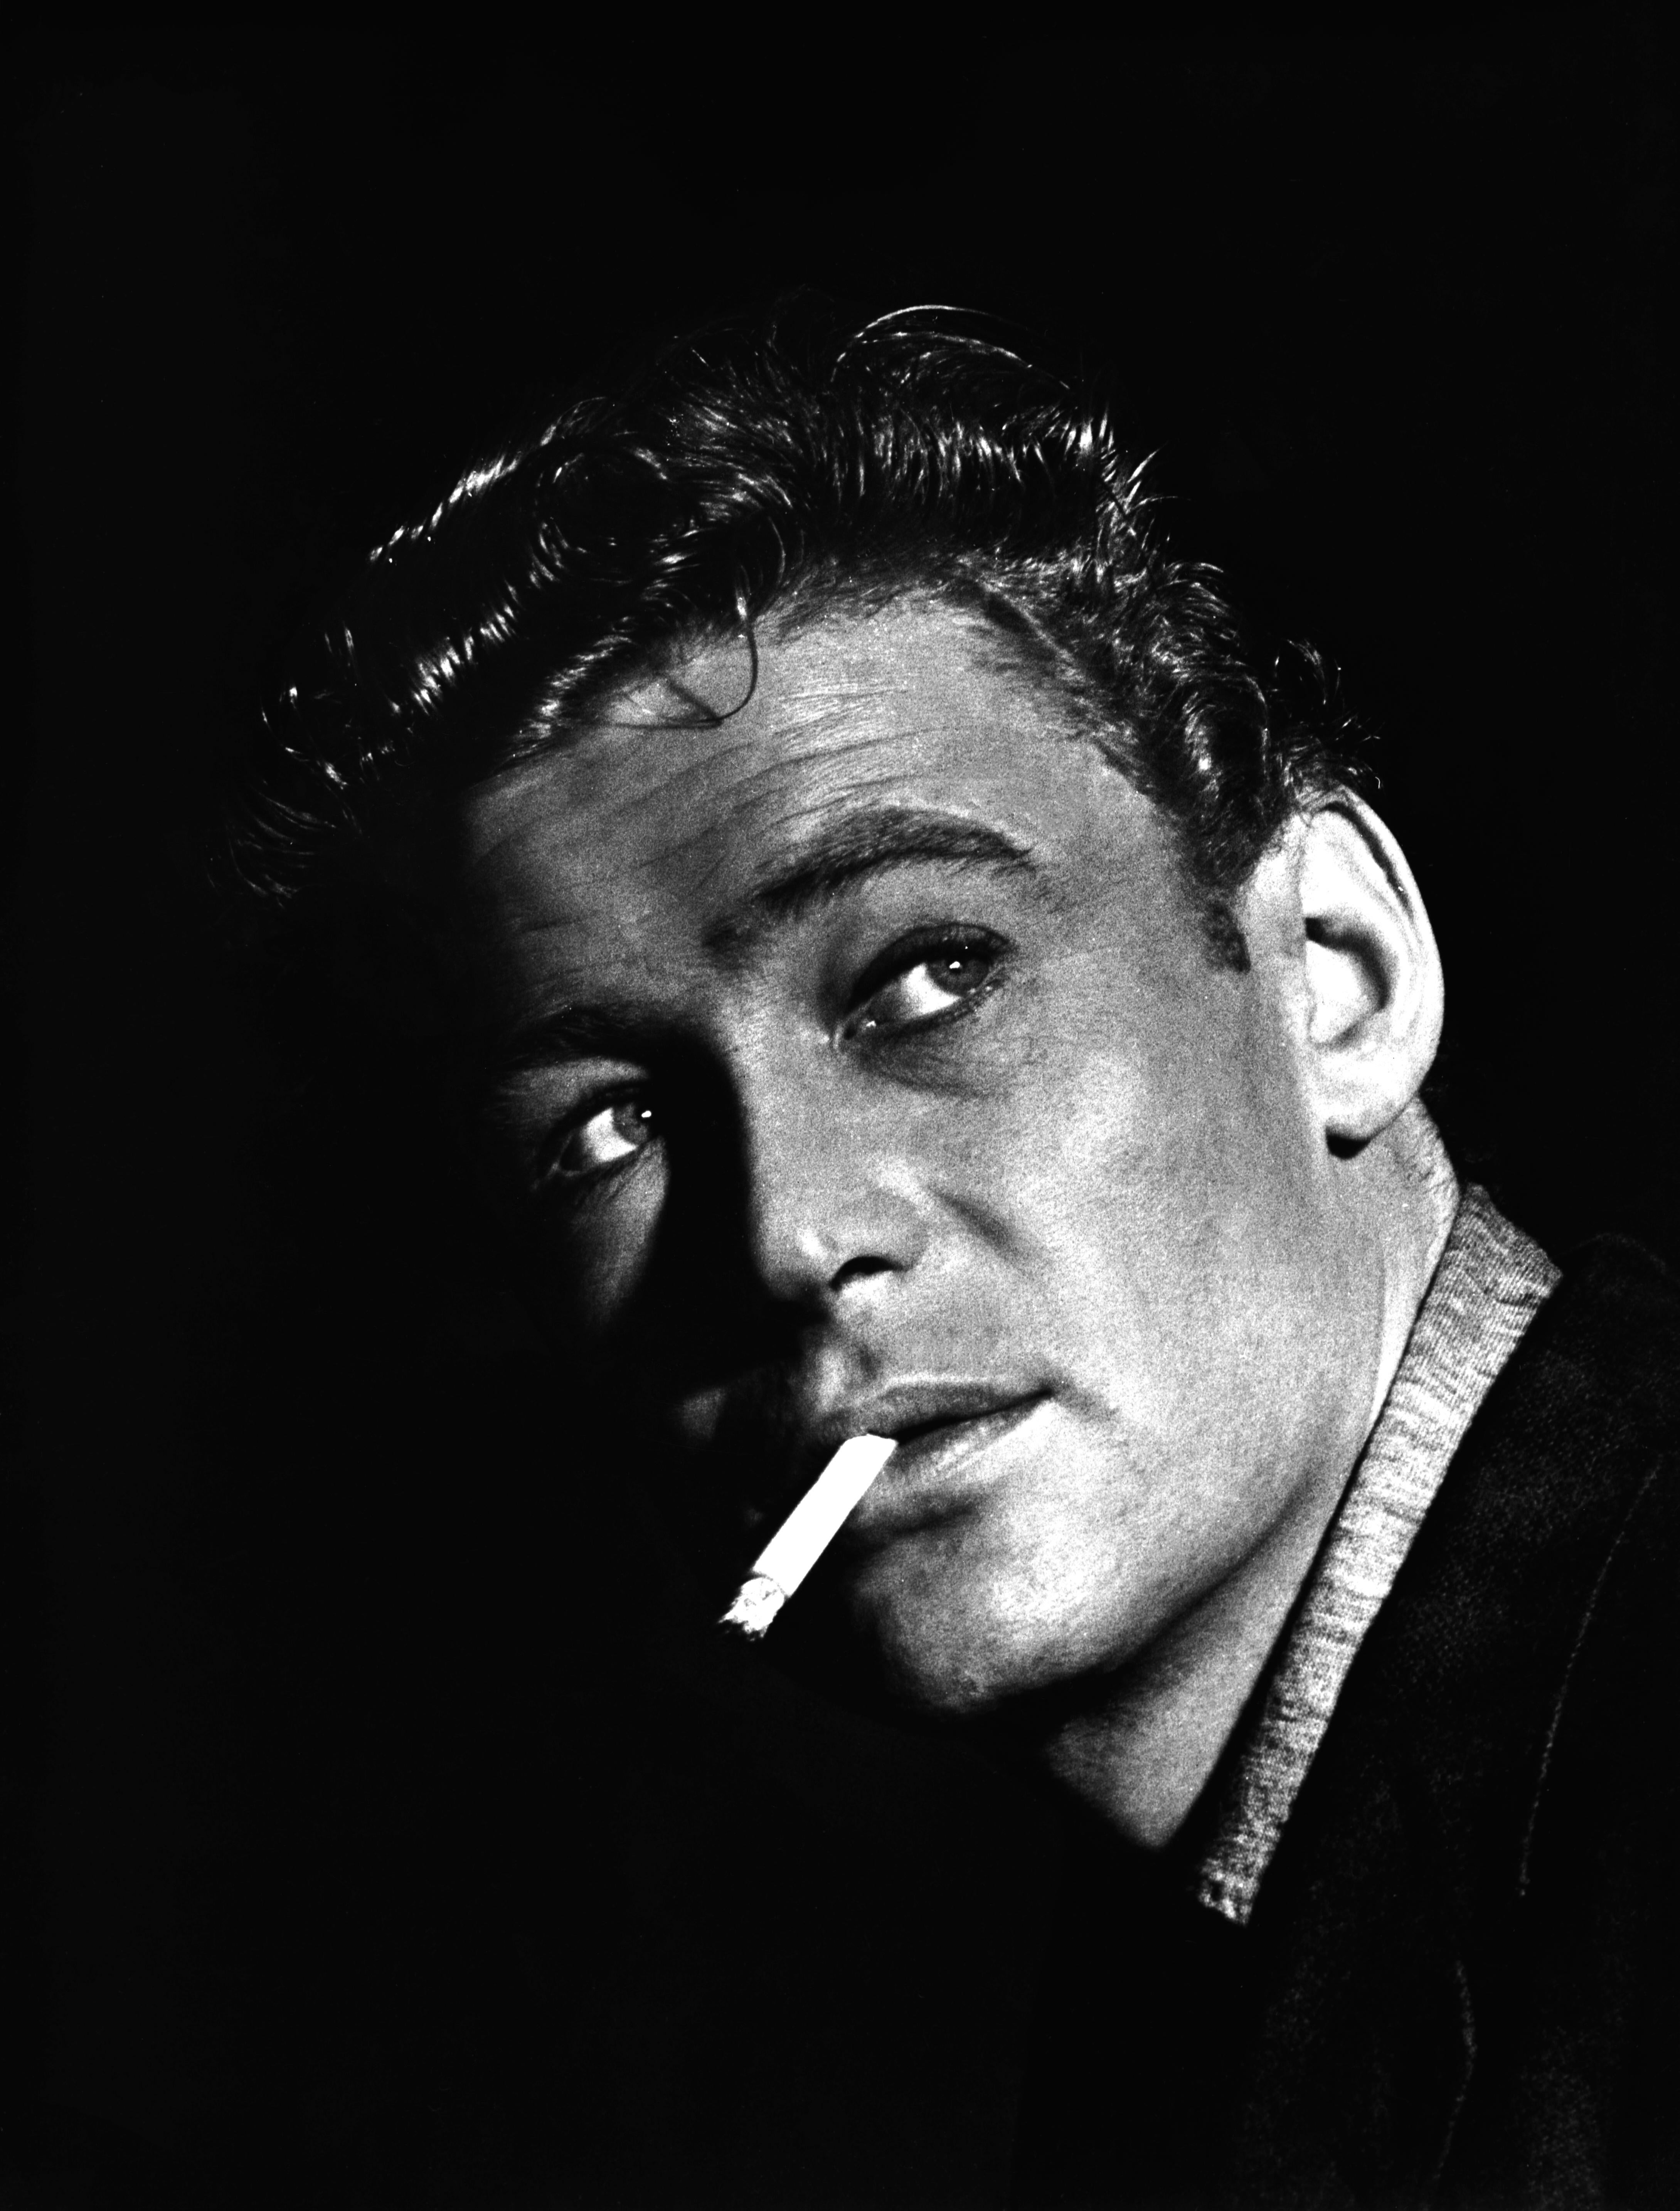 Unknown Portrait Photograph - Peter O'Toole Smoking Movie Star News Fine Art Print